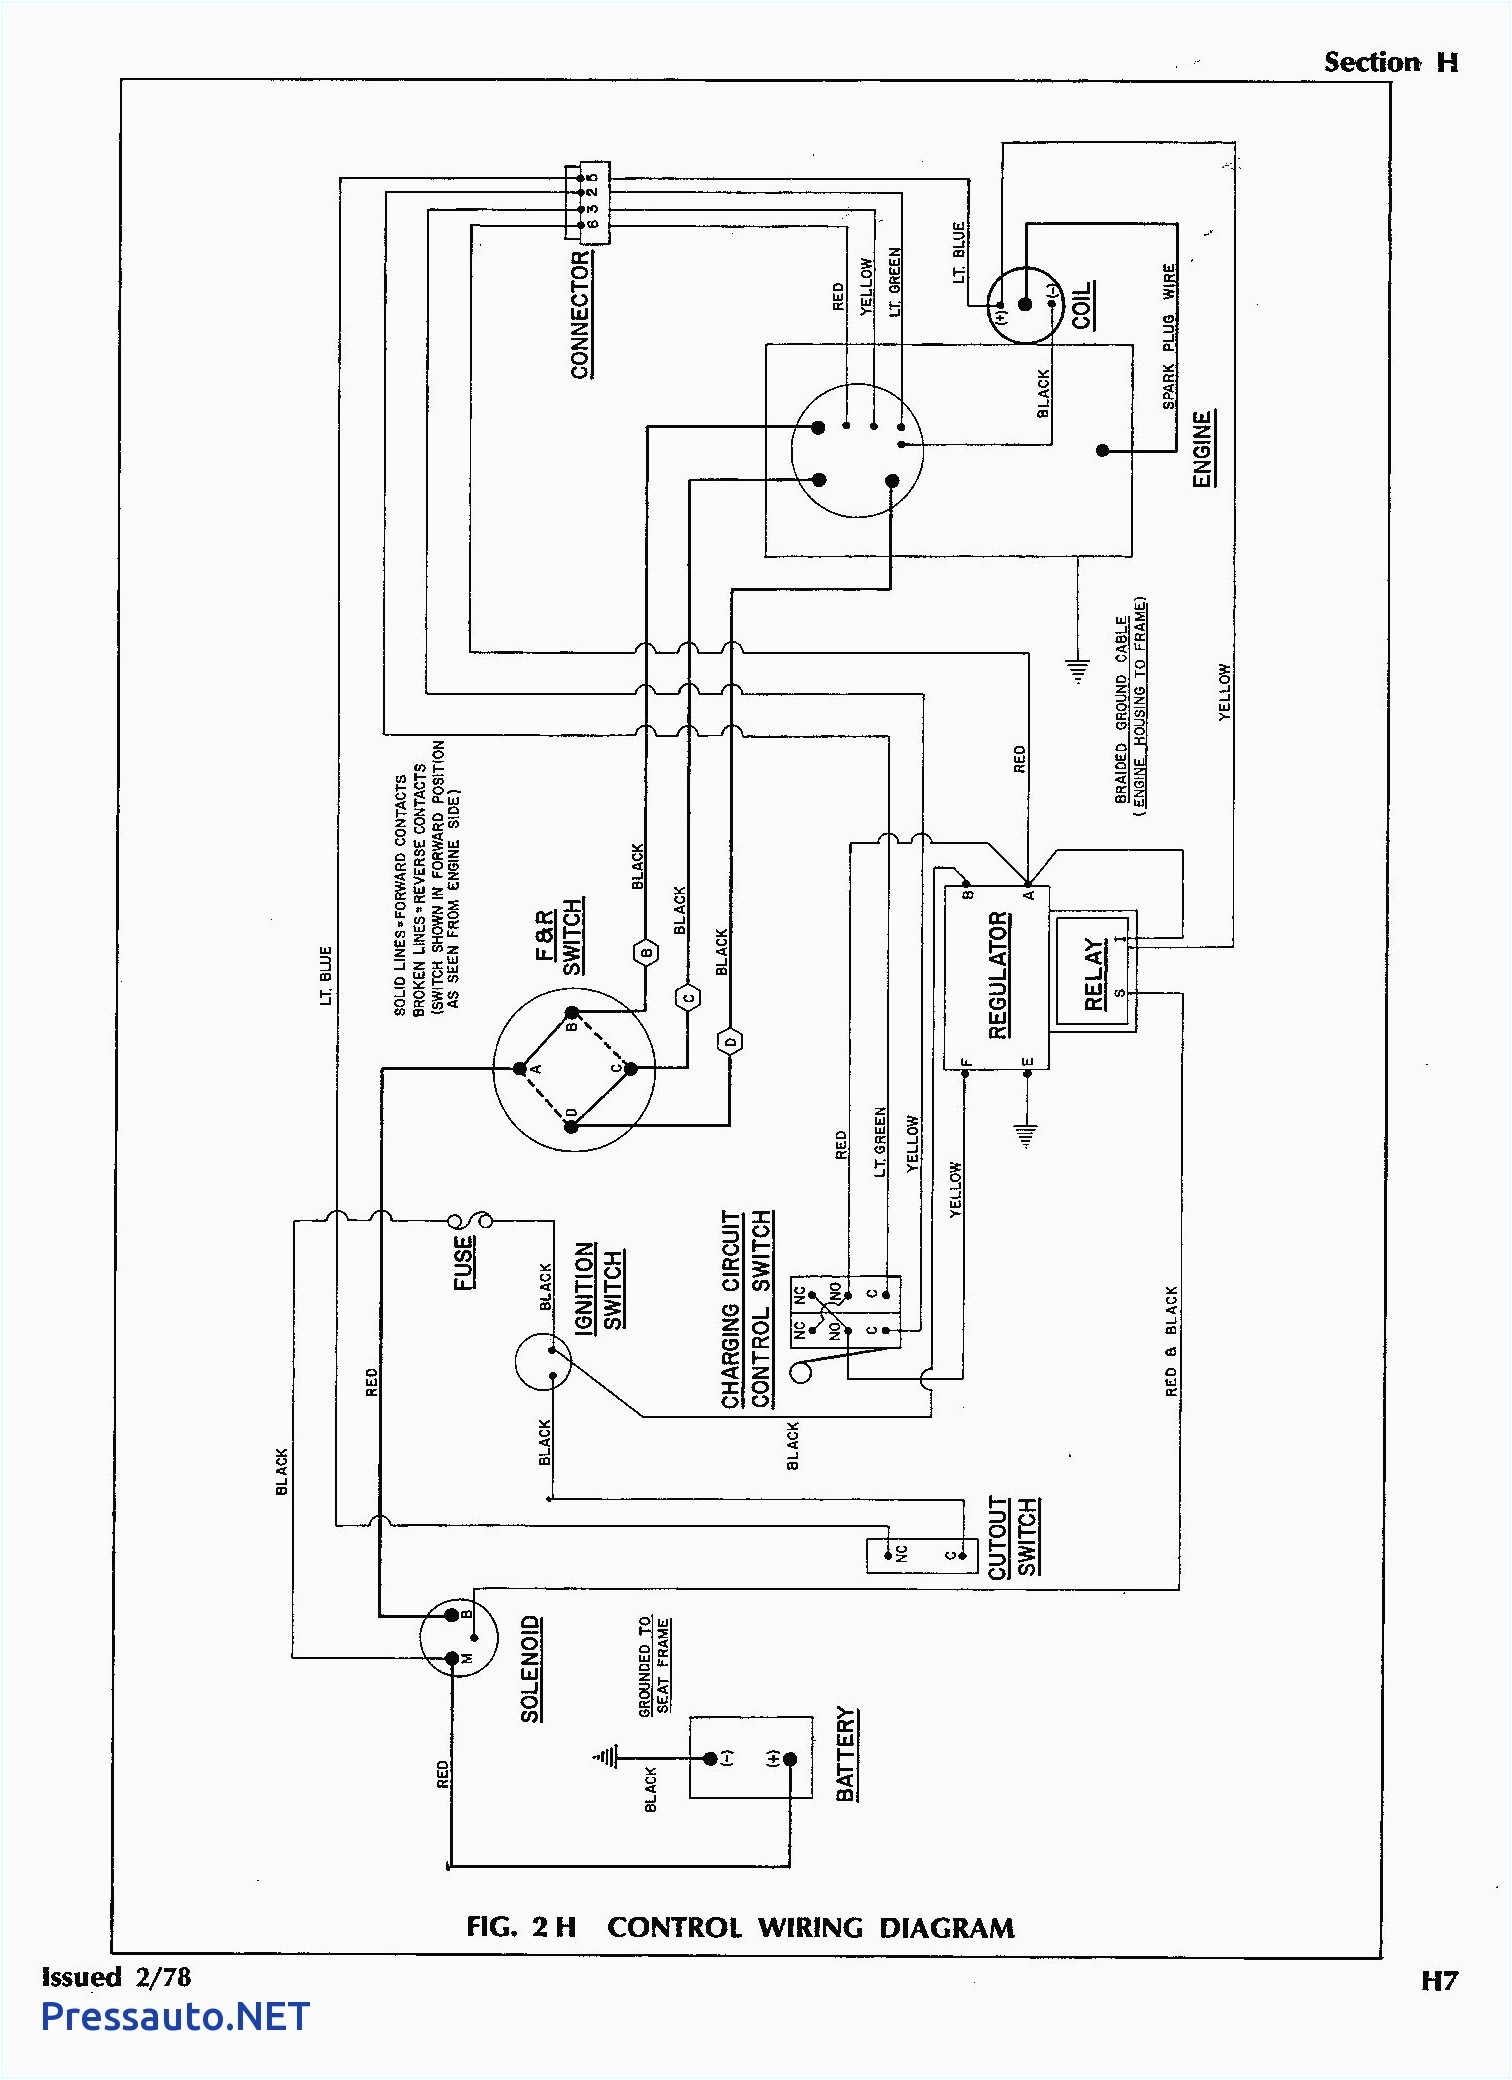 1994 ezgo gas wiring diagram manual e book 1994 ez go golf cart wiring diagram wiring